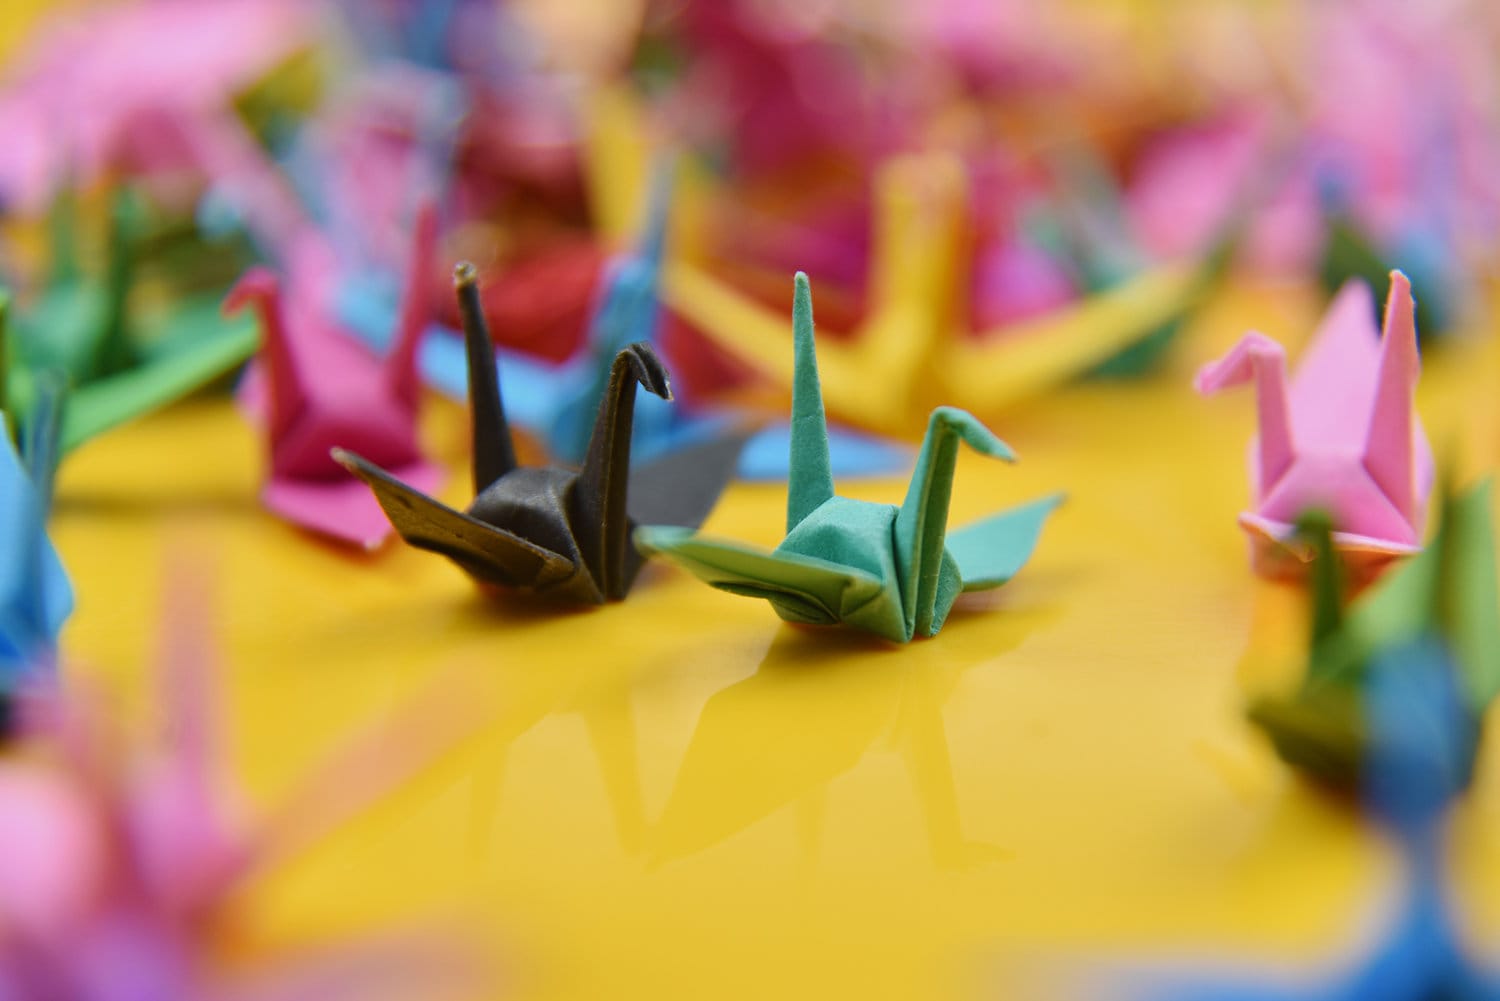 Gru di carta origami color arcobaleno 1000 - Gru origami - Realizzata in 3,81 cm (1,5 pollici) - per decorazioni di nozze